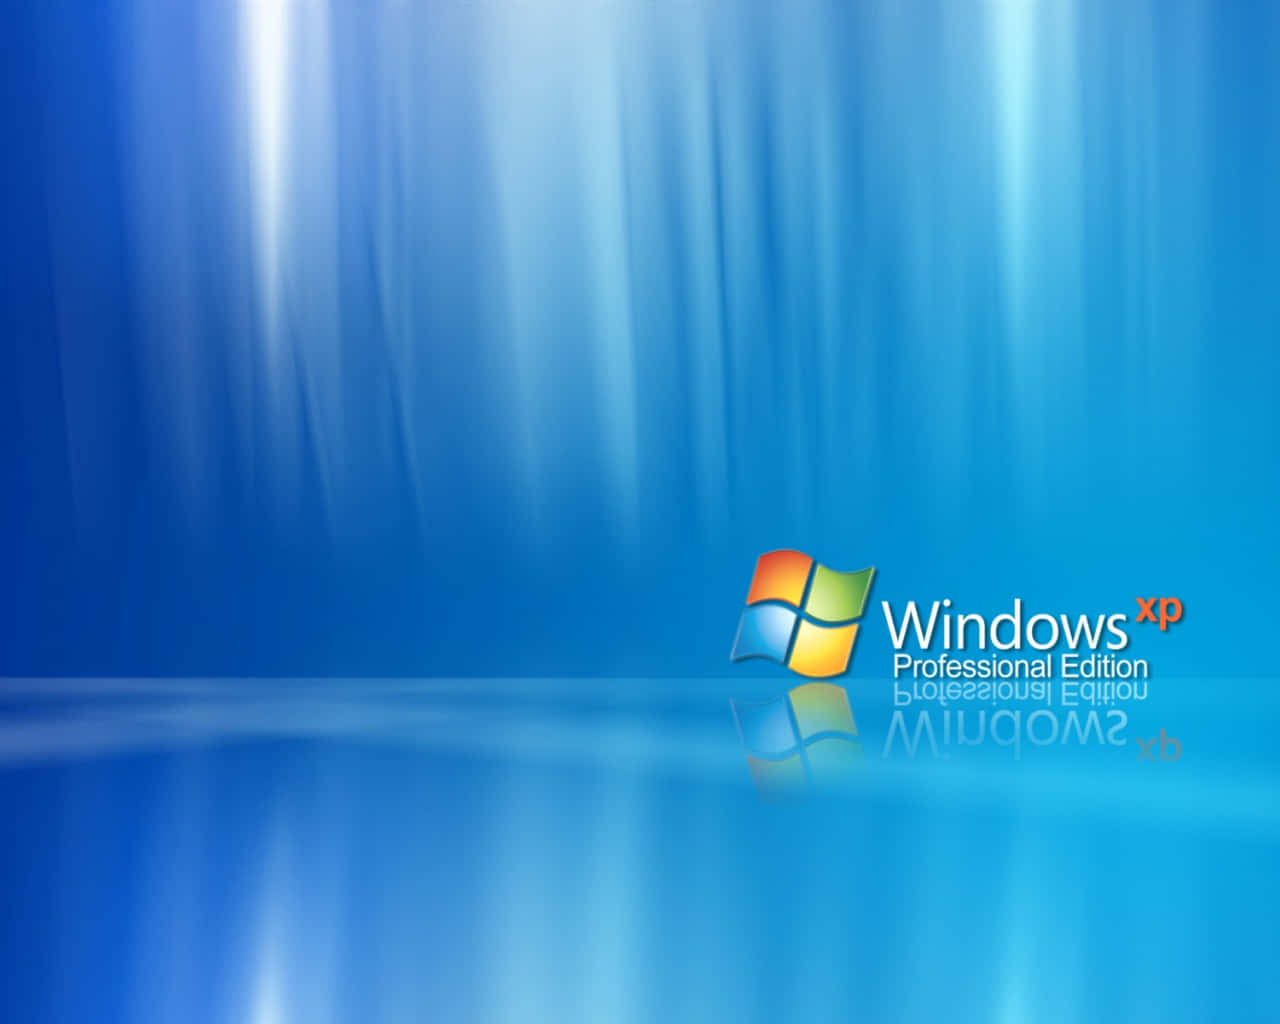 Enjoy the classic Windows XP Desktop